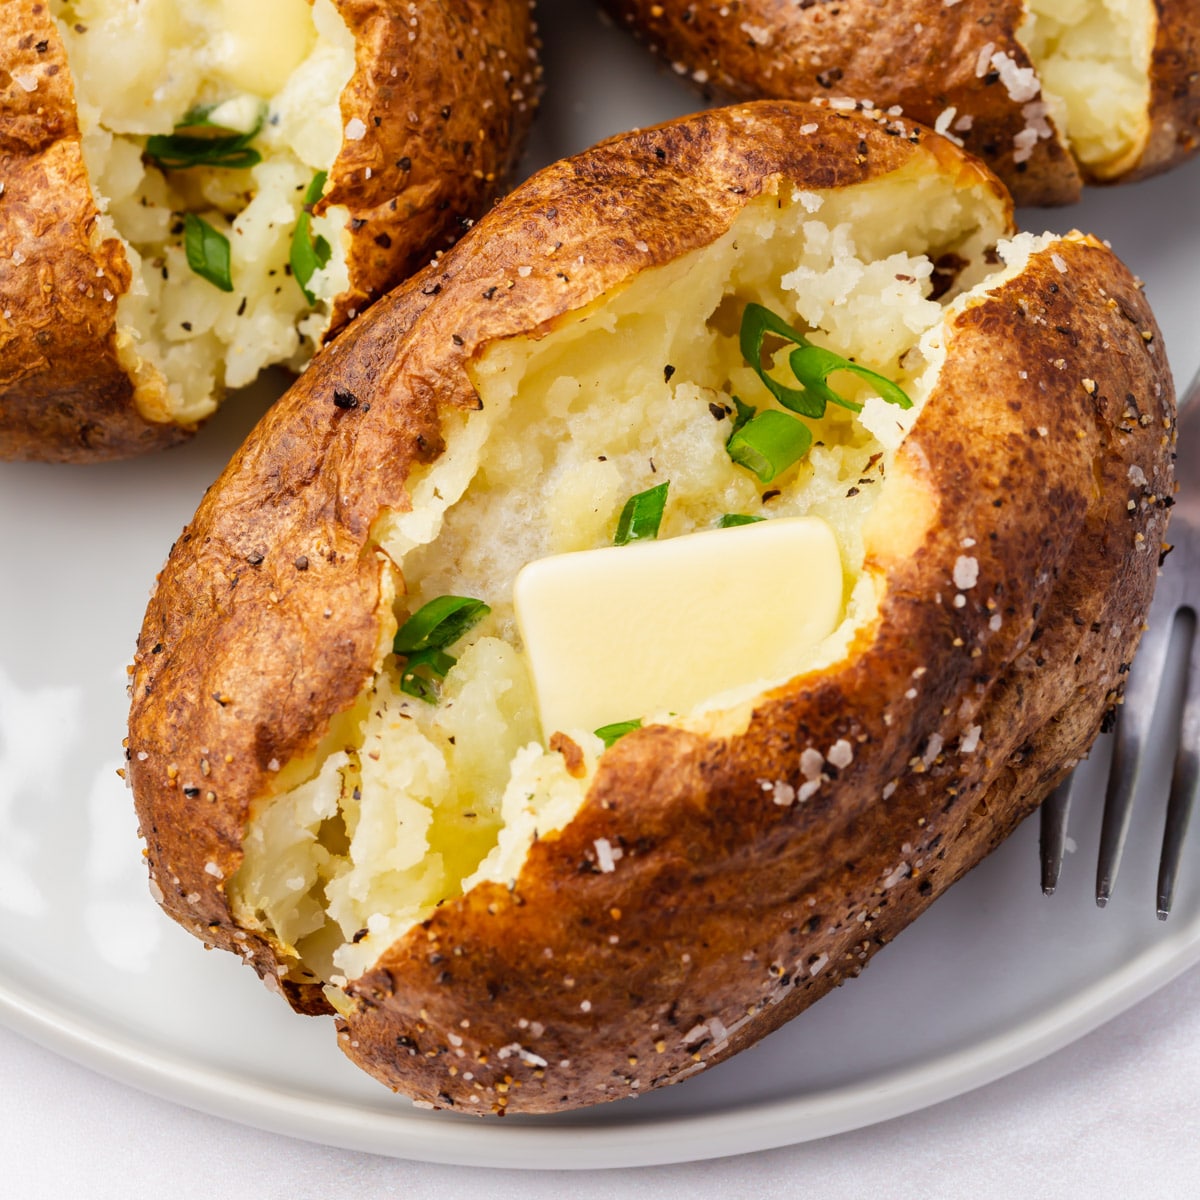 https://vegetarianmamma.com/wp-content/uploads/2021/03/Air-Fryer-Baked-Potato-Featured-Image1.jpg